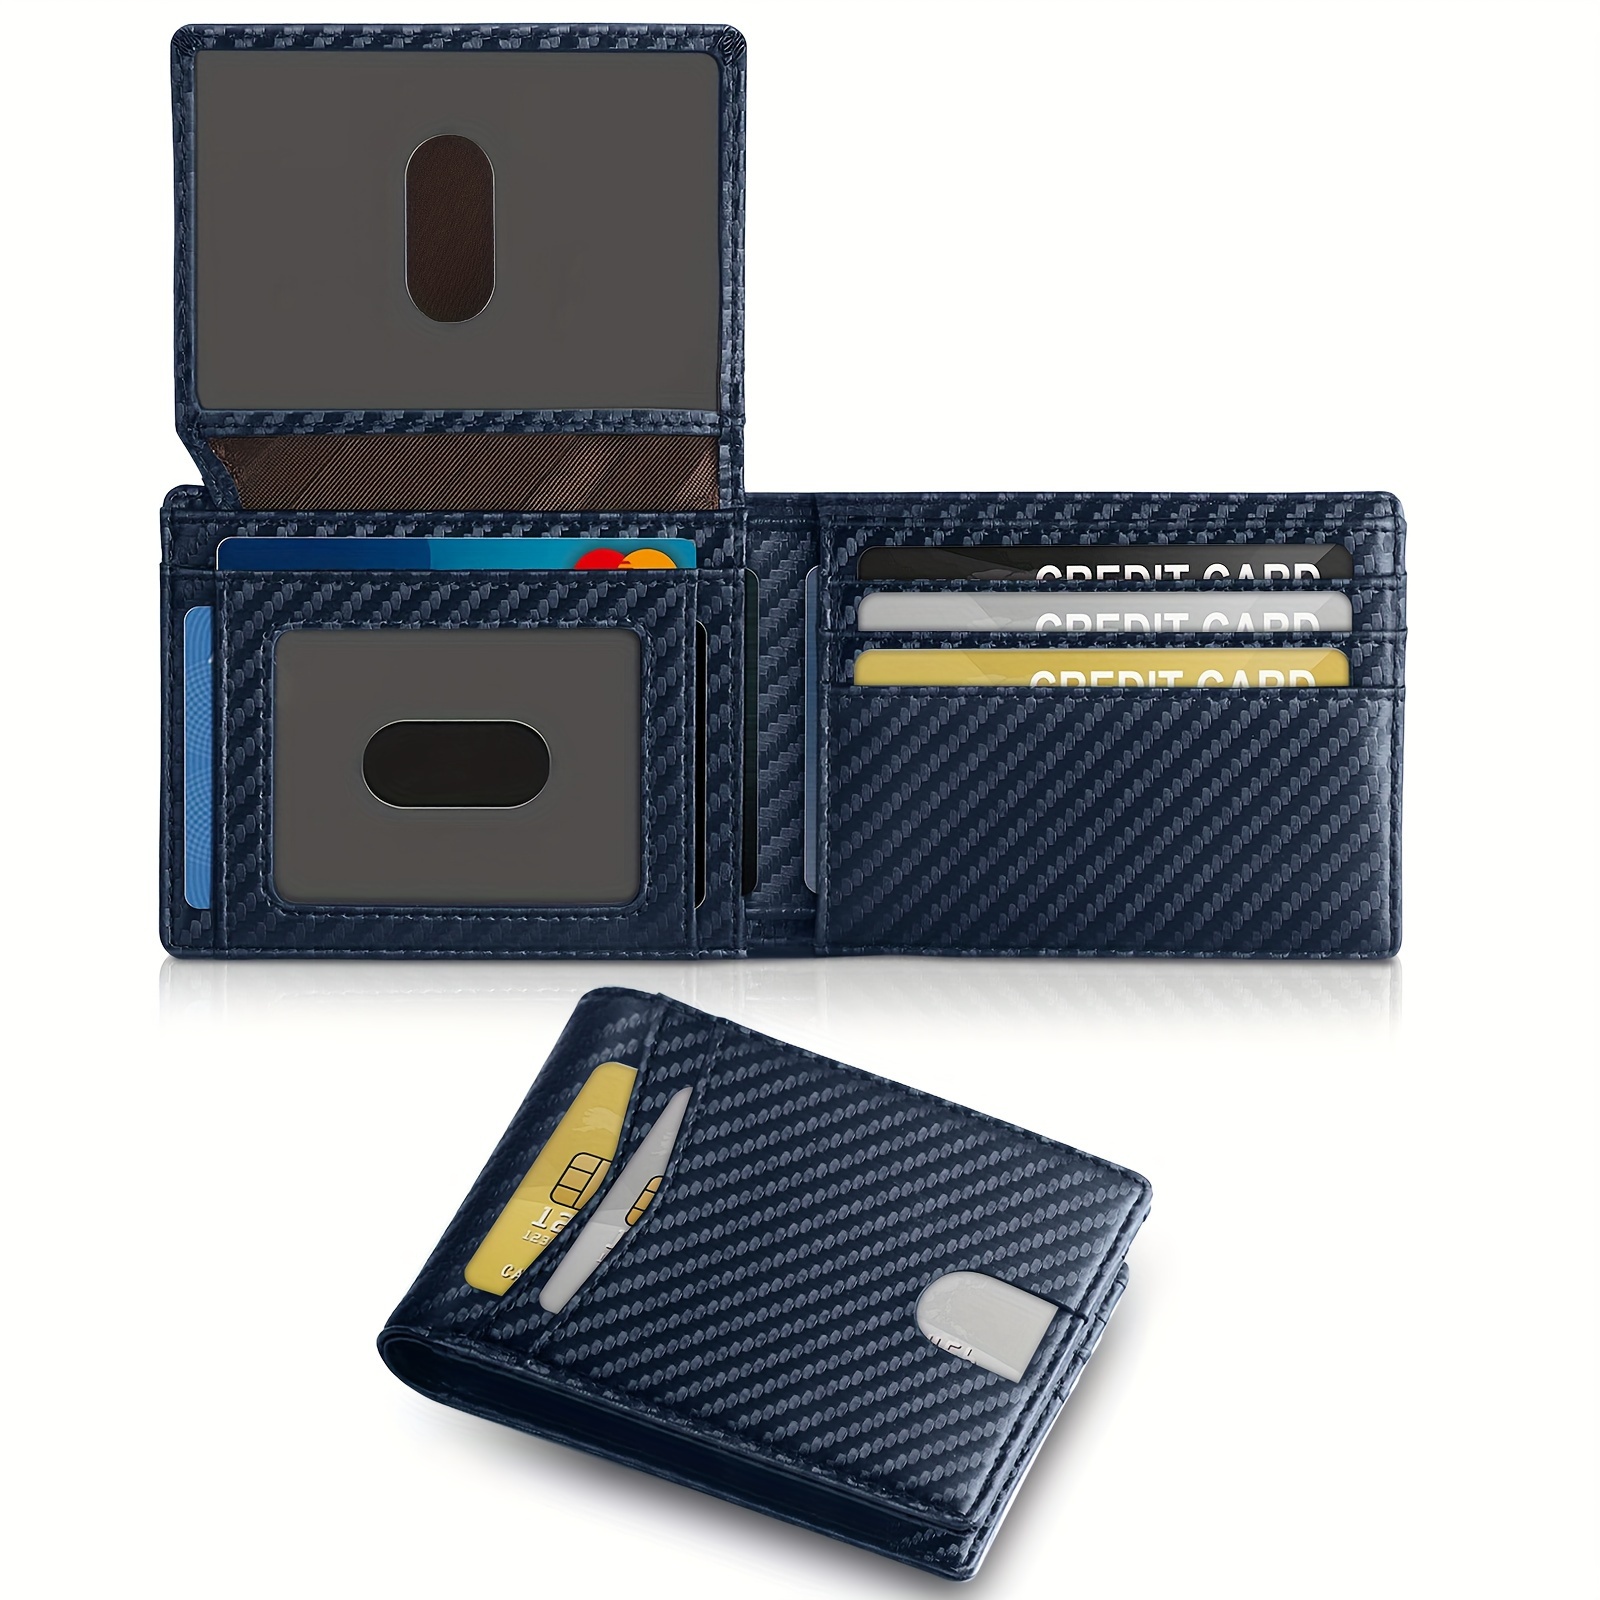 

Men's Slim Rfid Leather Wallet 2 Id Pockets, Carbon Black - 15 Slots, Minimalist